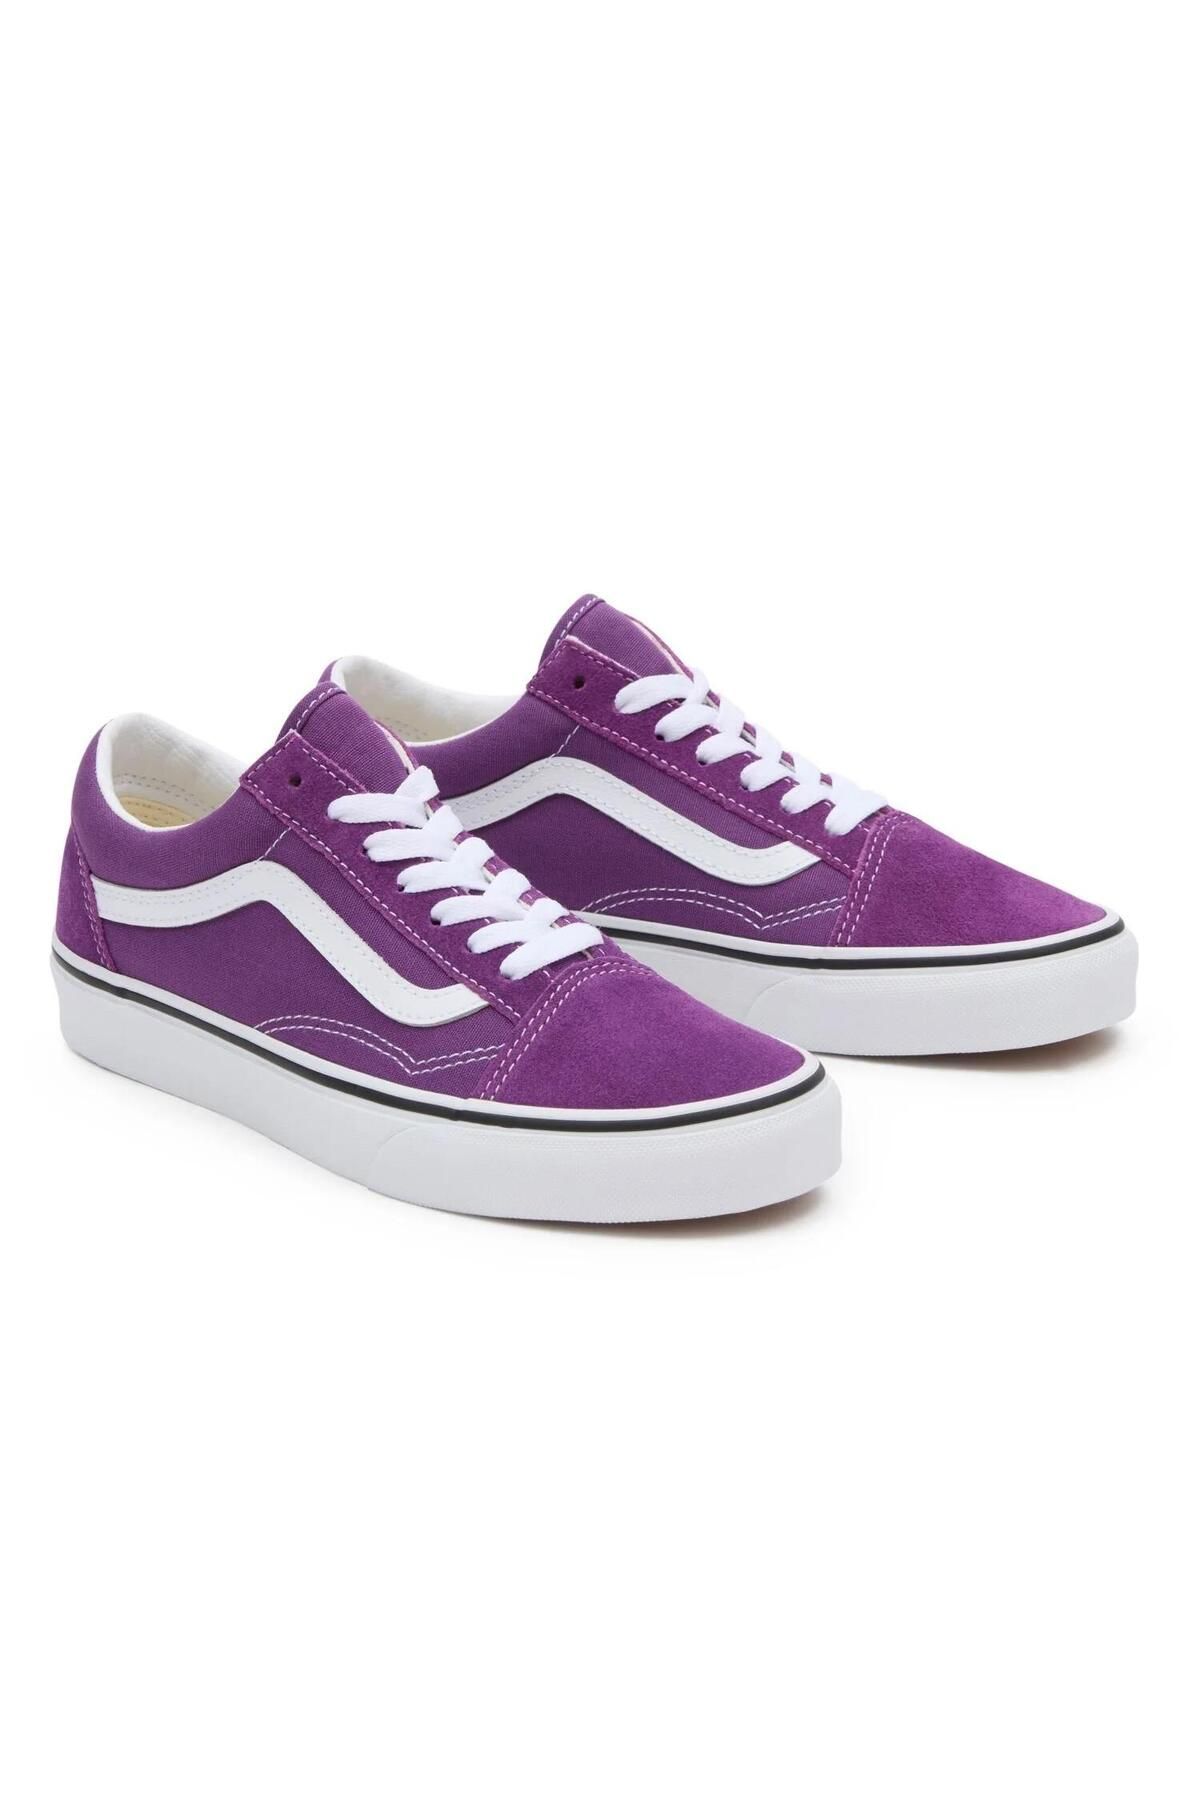 Vans Ua Old Skool Colour Theory Purple Magic Unisex Sneaker